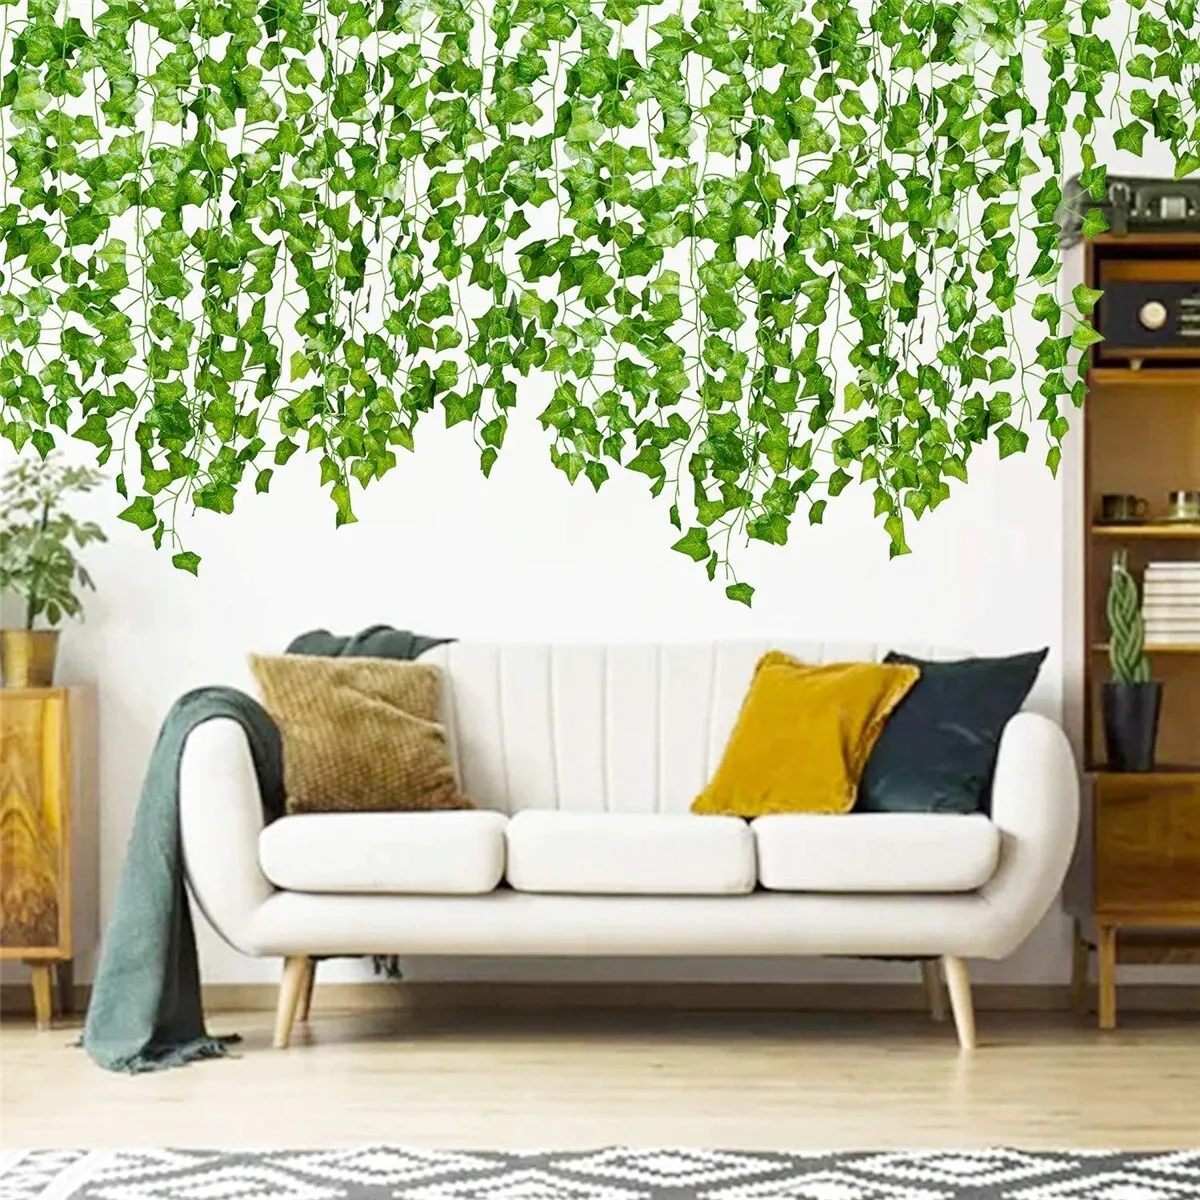 Artificial Plants Home Decor Green Silk Hanging vines Fake Leaf Garland